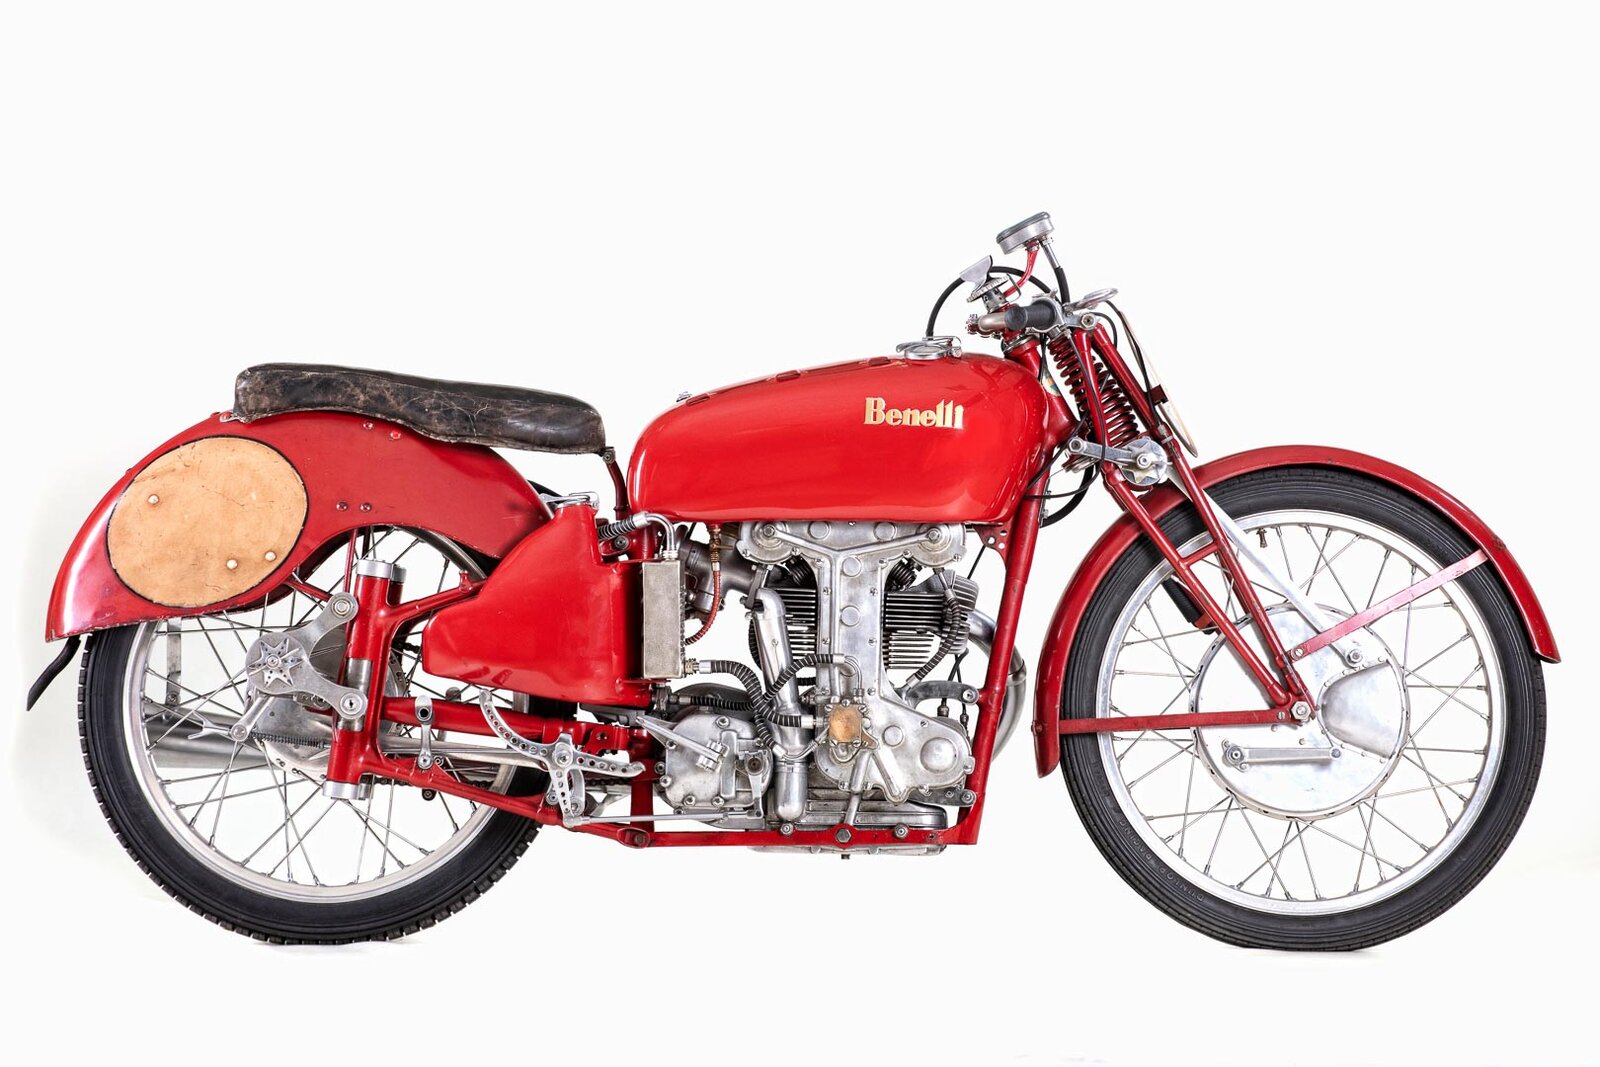 1950-Benelli-250-Bialbero-Corsa-Dario-Ambrosini-Bonhams-Summer-Auction.jpg